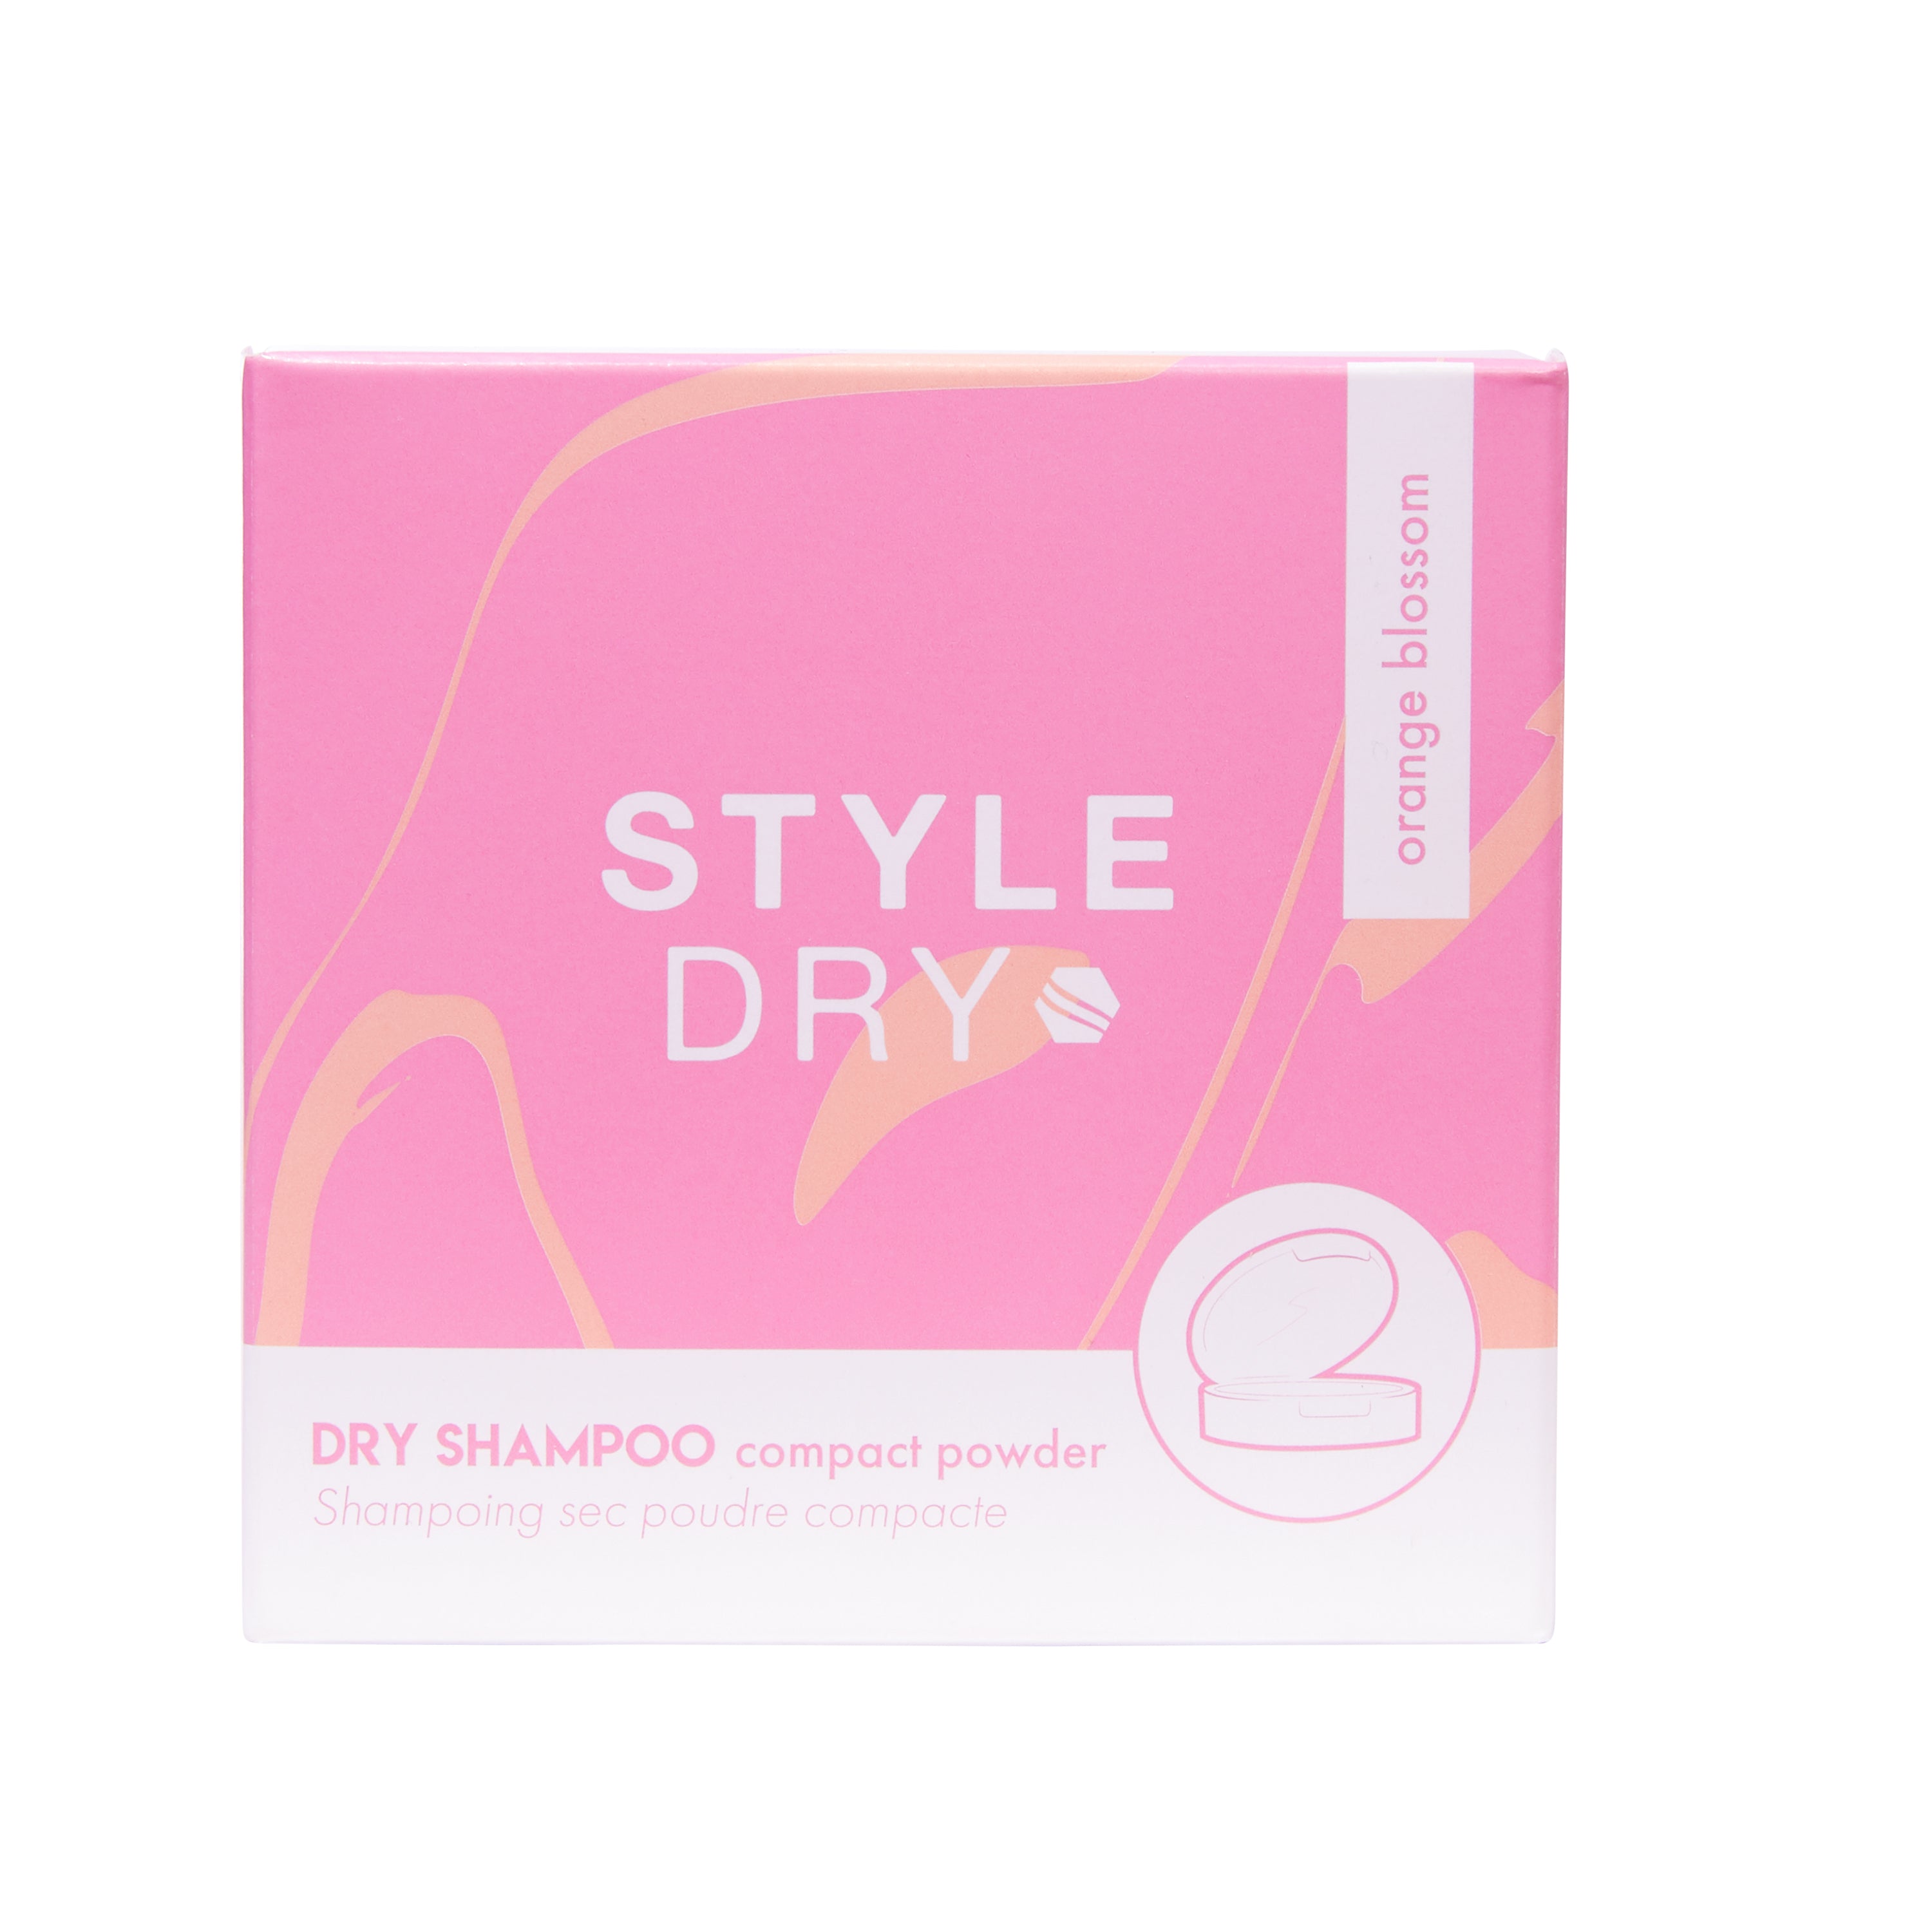 STYLEDRY DRY SHAMPOO COMPACT POWDER - Orange Blossom X Phoenix Nationale